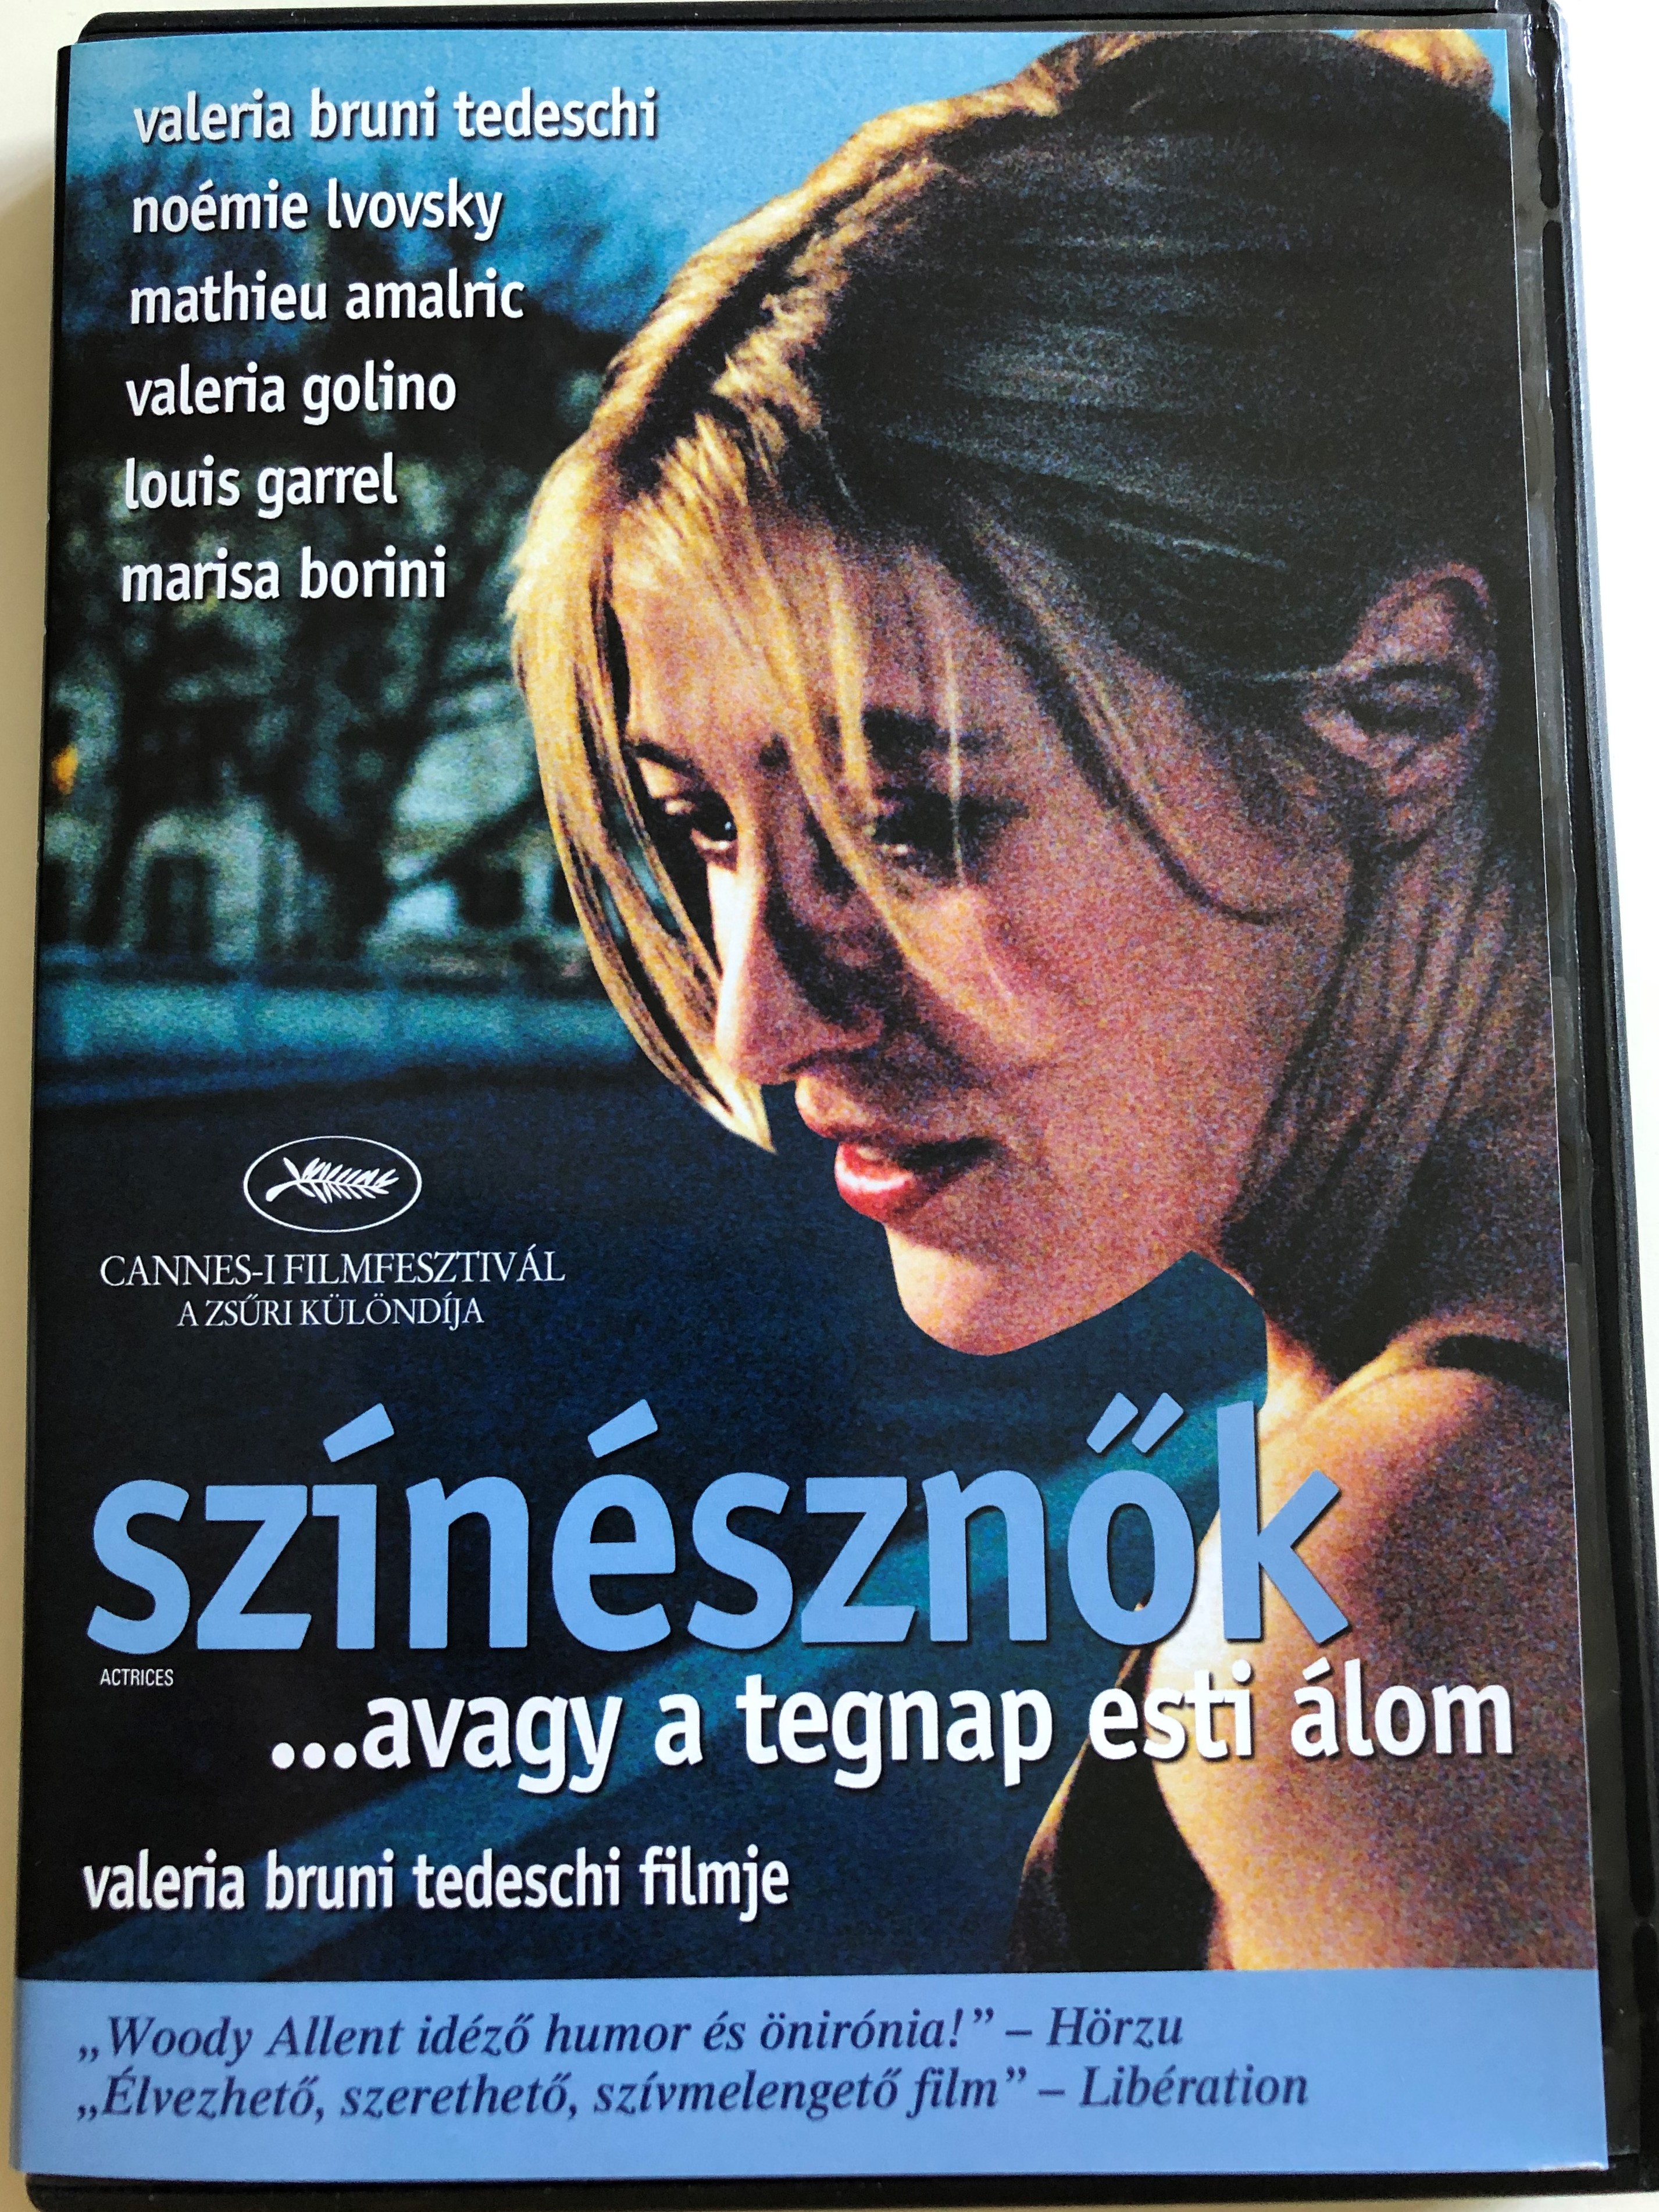 actrices-dvd-2007-sz-n-szn-k-directed-by-valeria-bruni-tedeschi-starring-valeria-bruni-tedeschi-no-mie-lvovsky-mathieu-amalric-louis-garrel-valeria-golino-1-.jpg